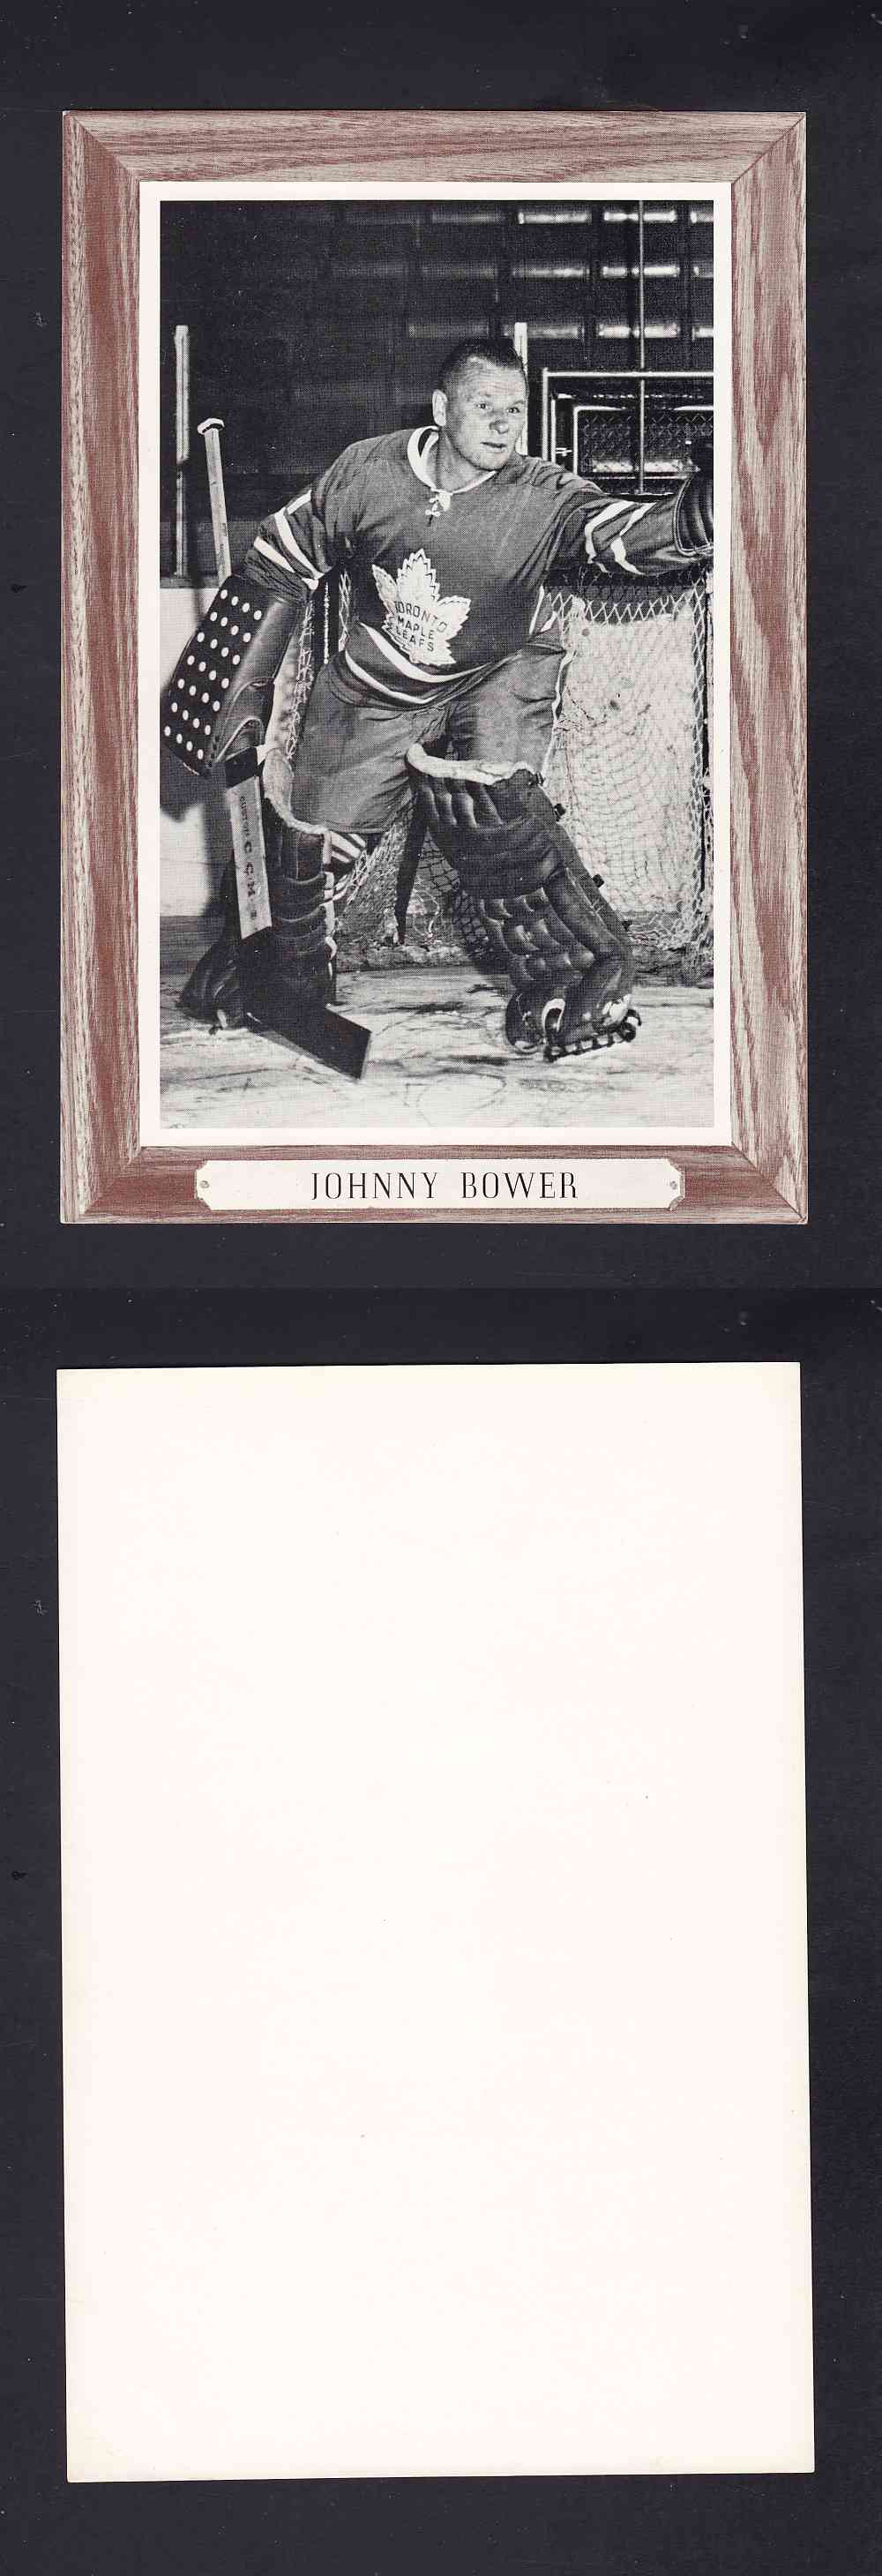 1964-67 BEEHIVE PHOTO GR.3 J. BOWER V.2 photo